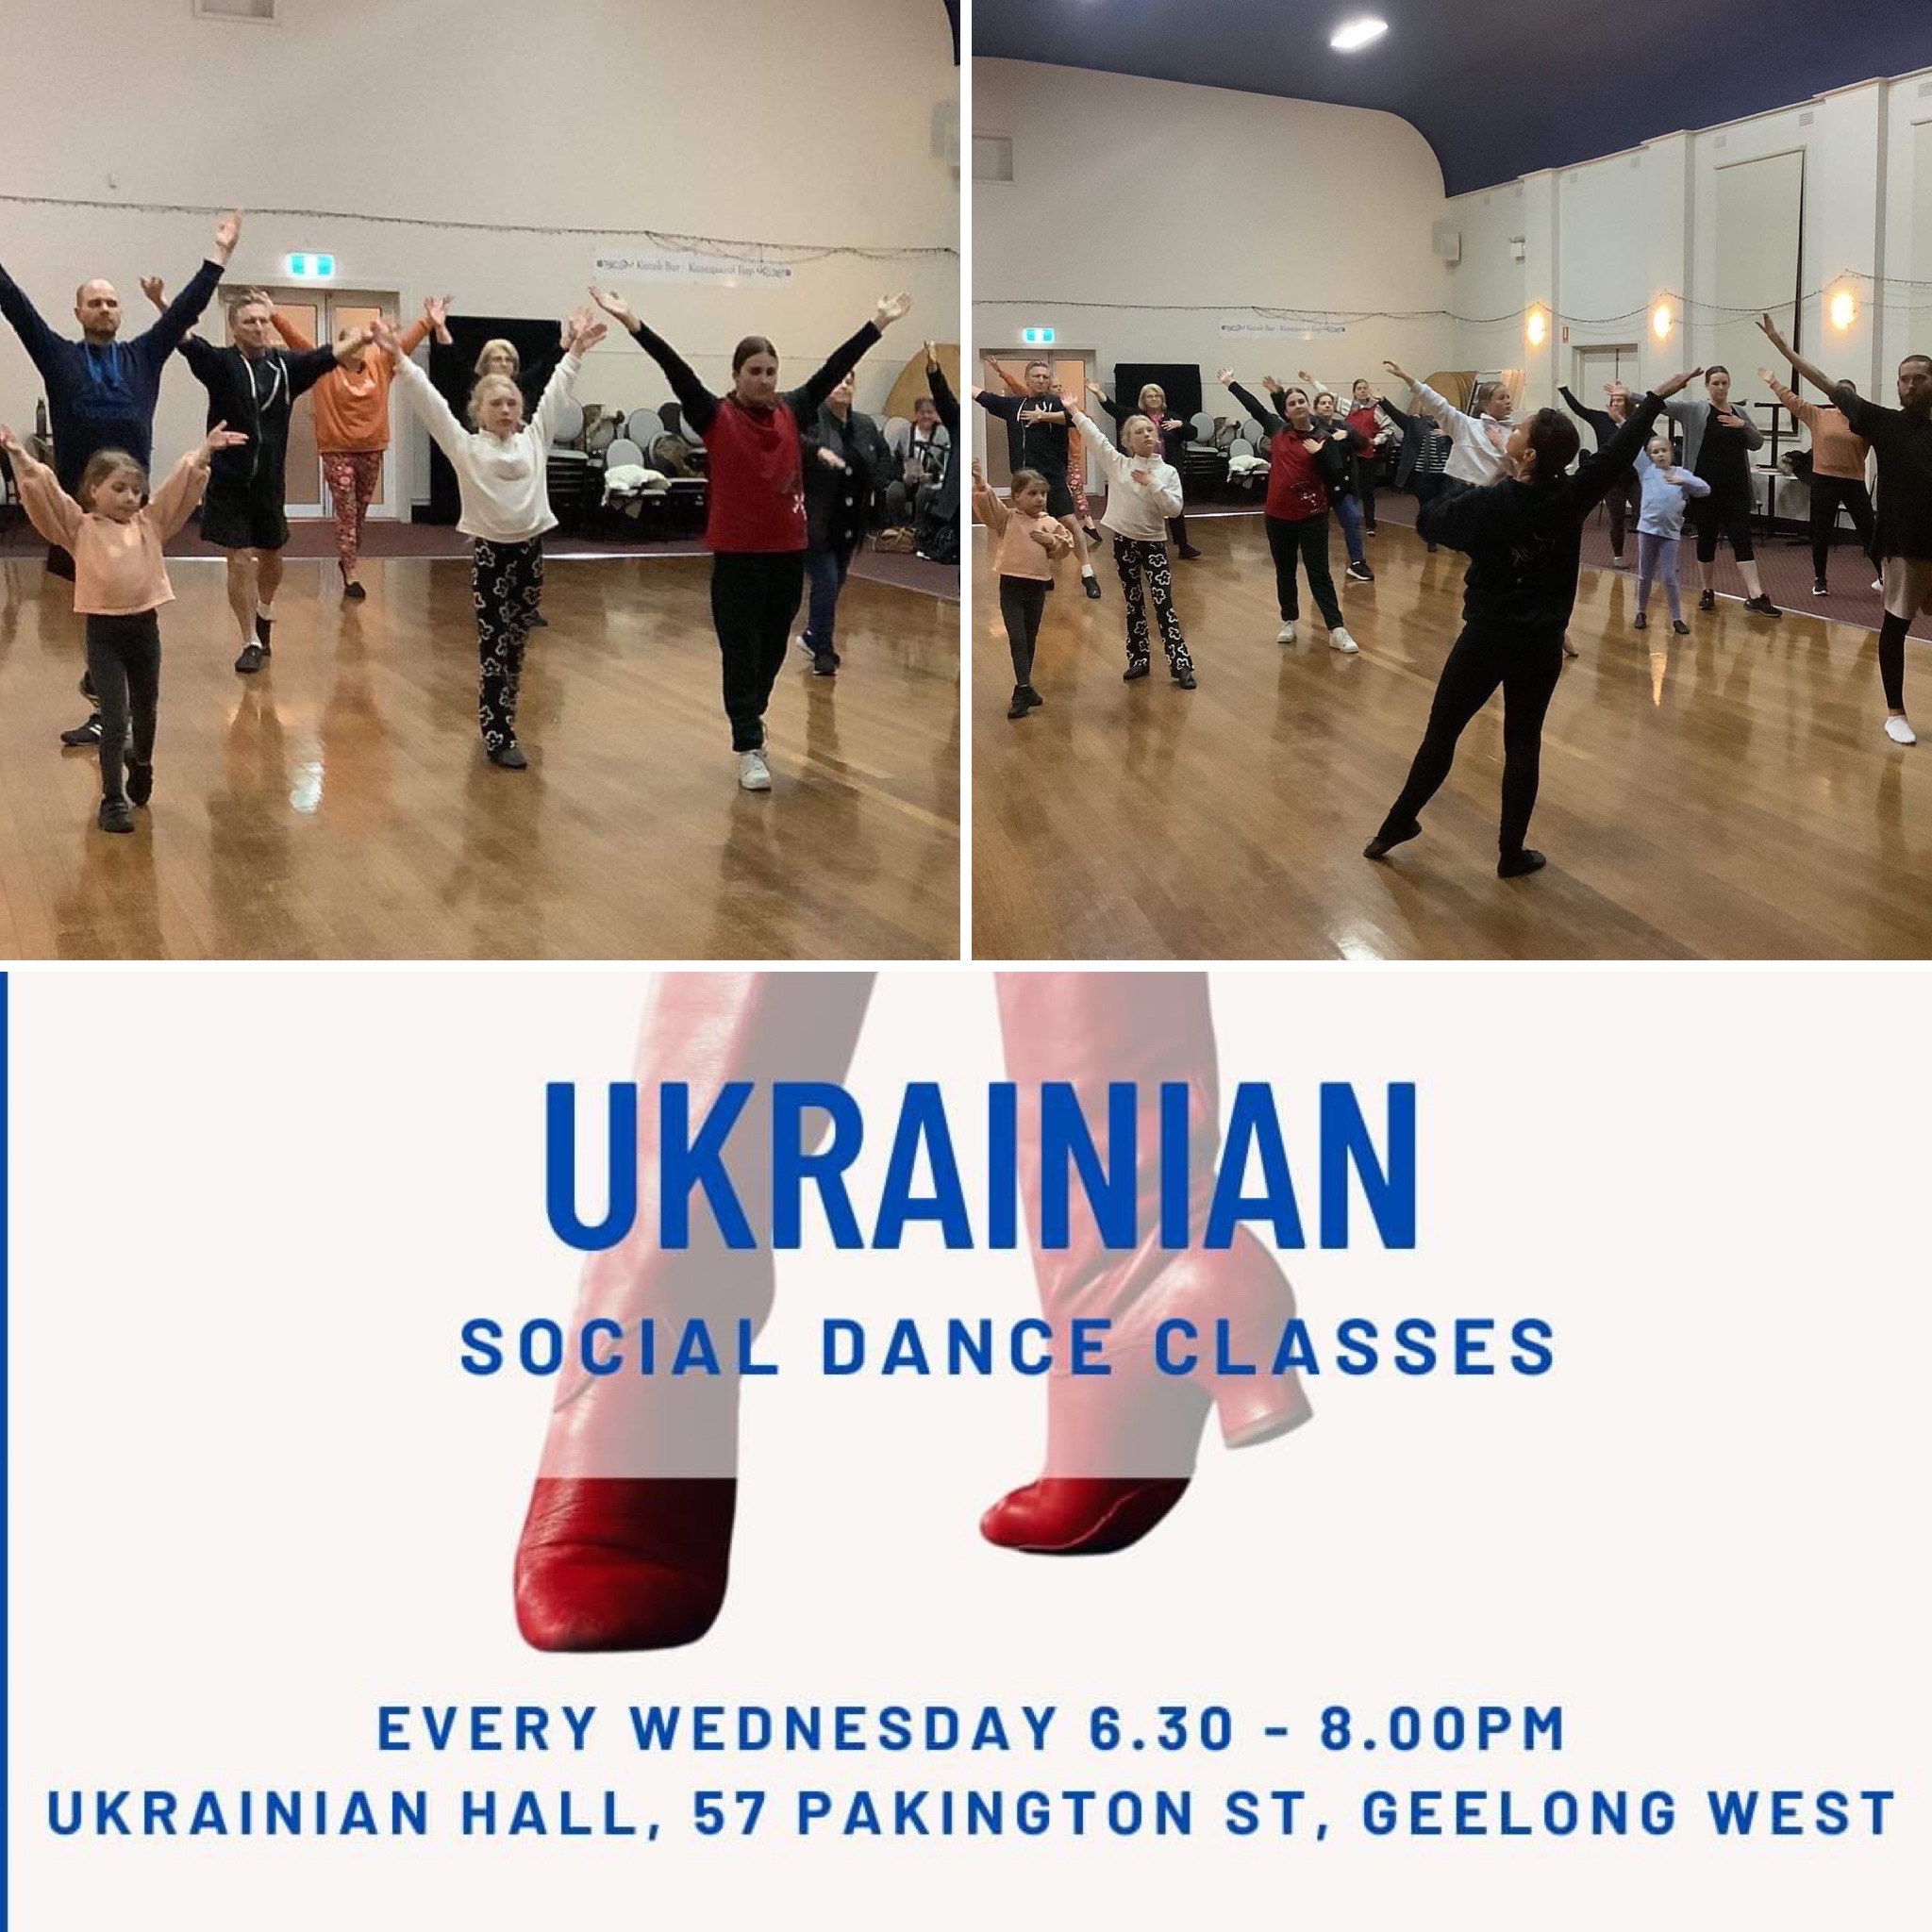 Ukrainian social dance classes